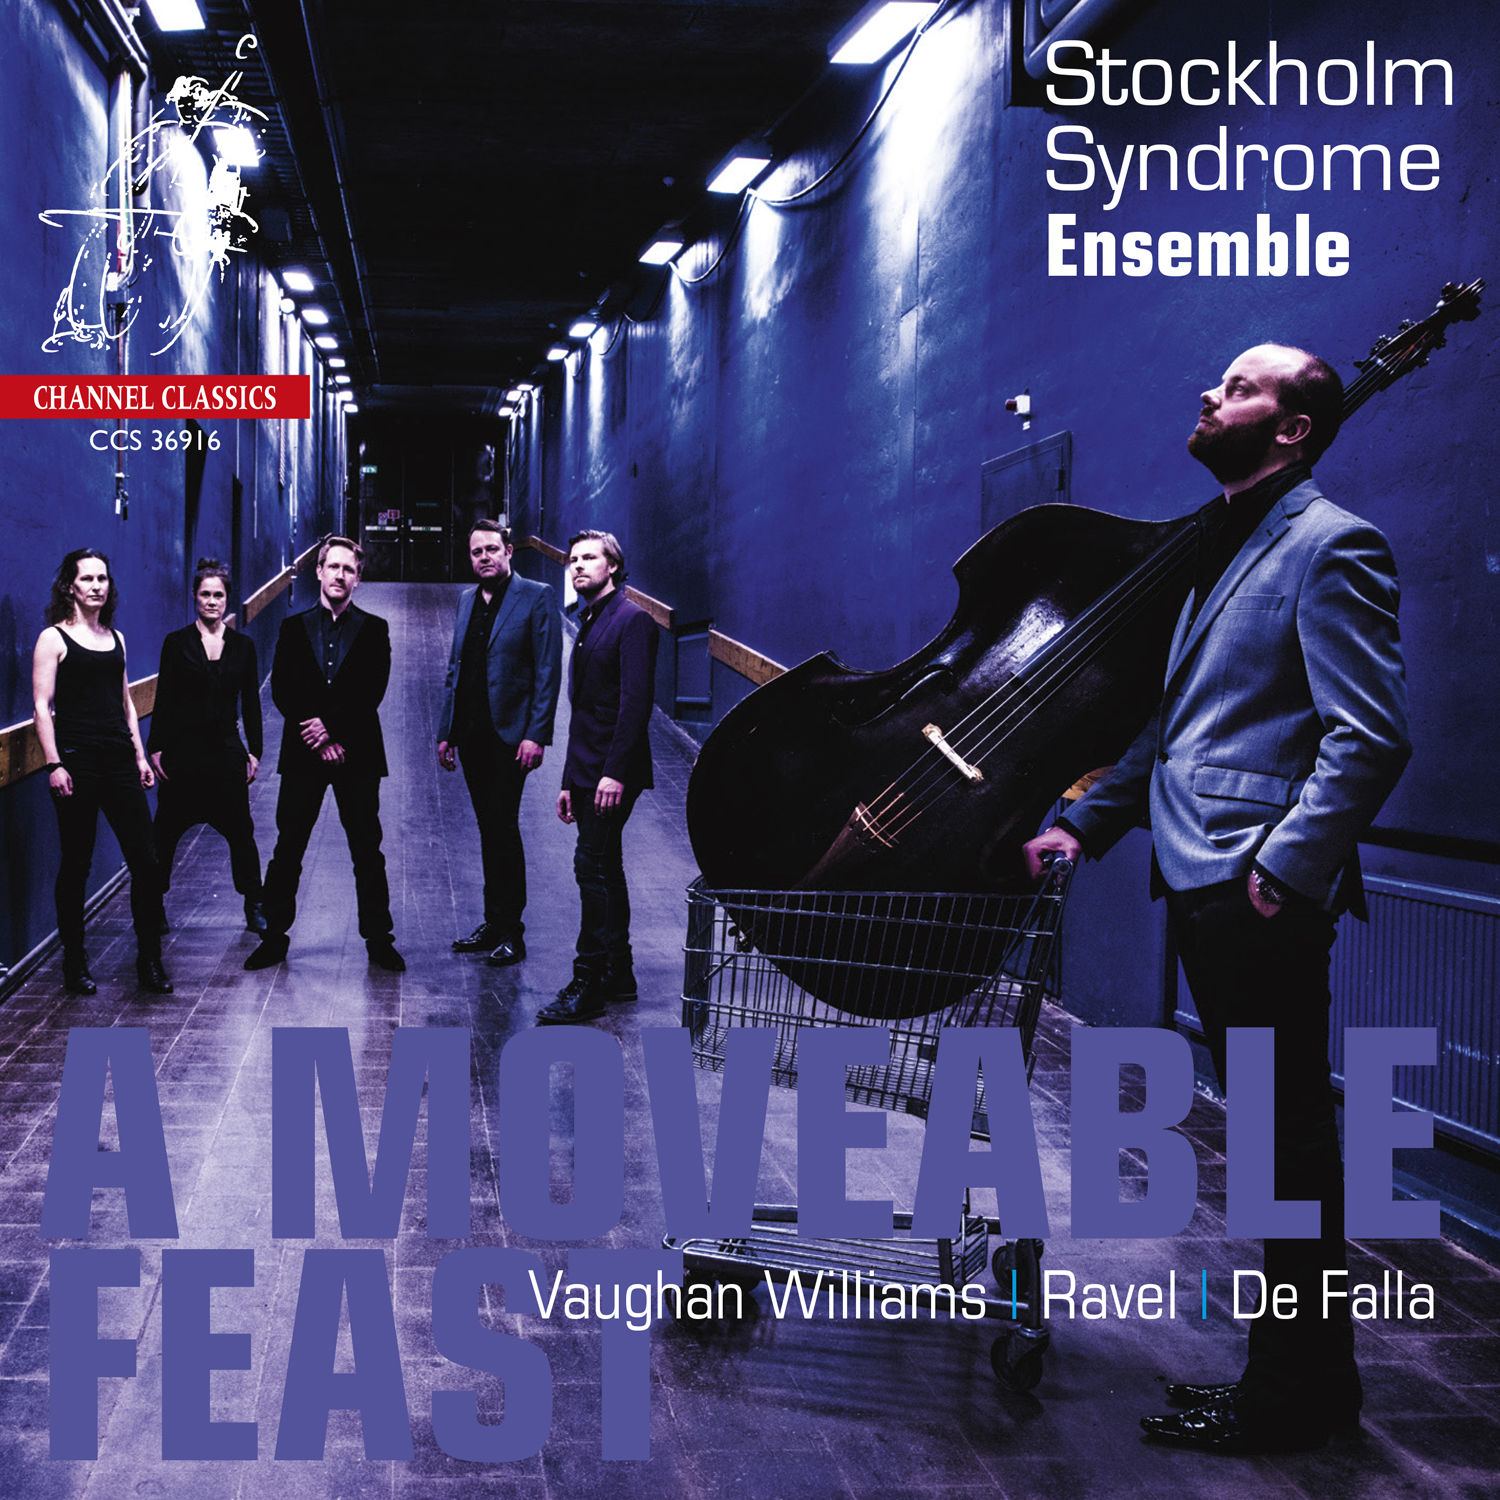 Stockholm Syndrome Ensemble – A Moveable Feast